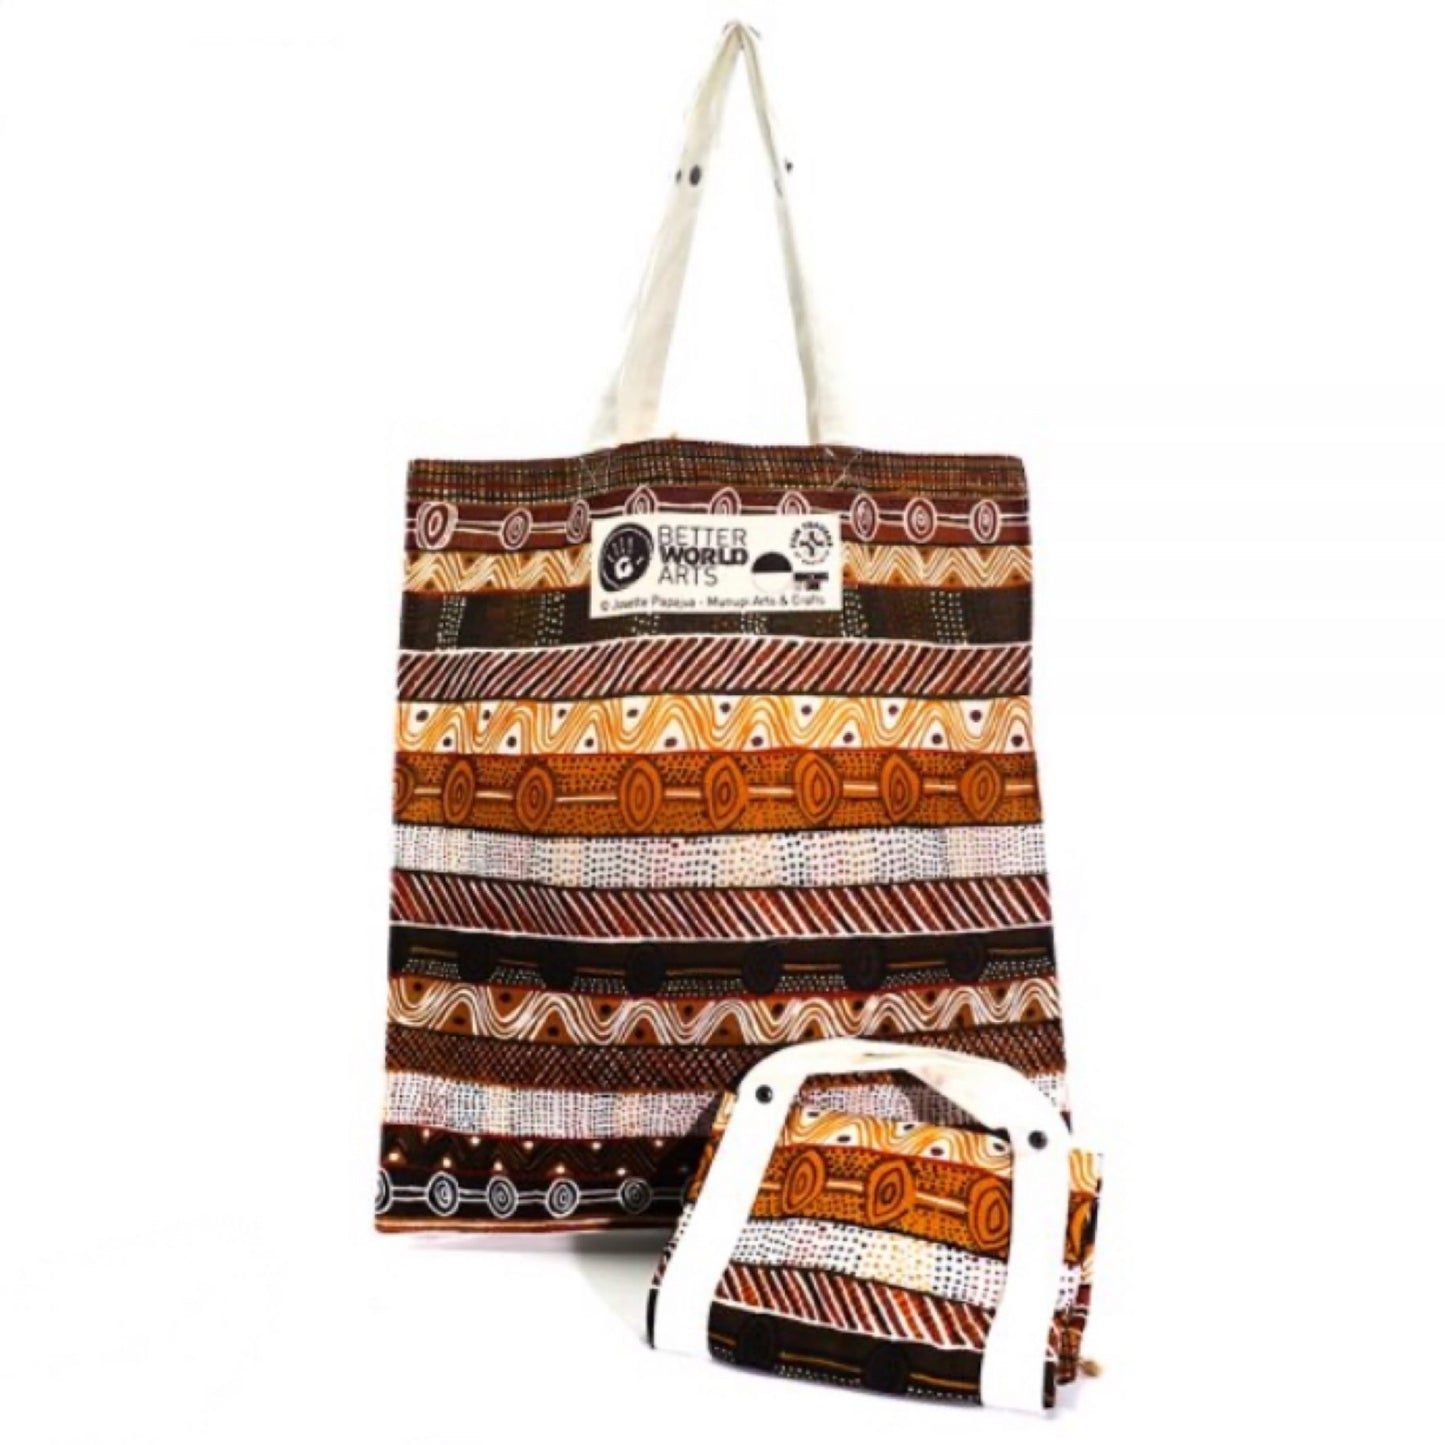 Better World Arts Foldable Cotton Bag - Artist Josette Papajua